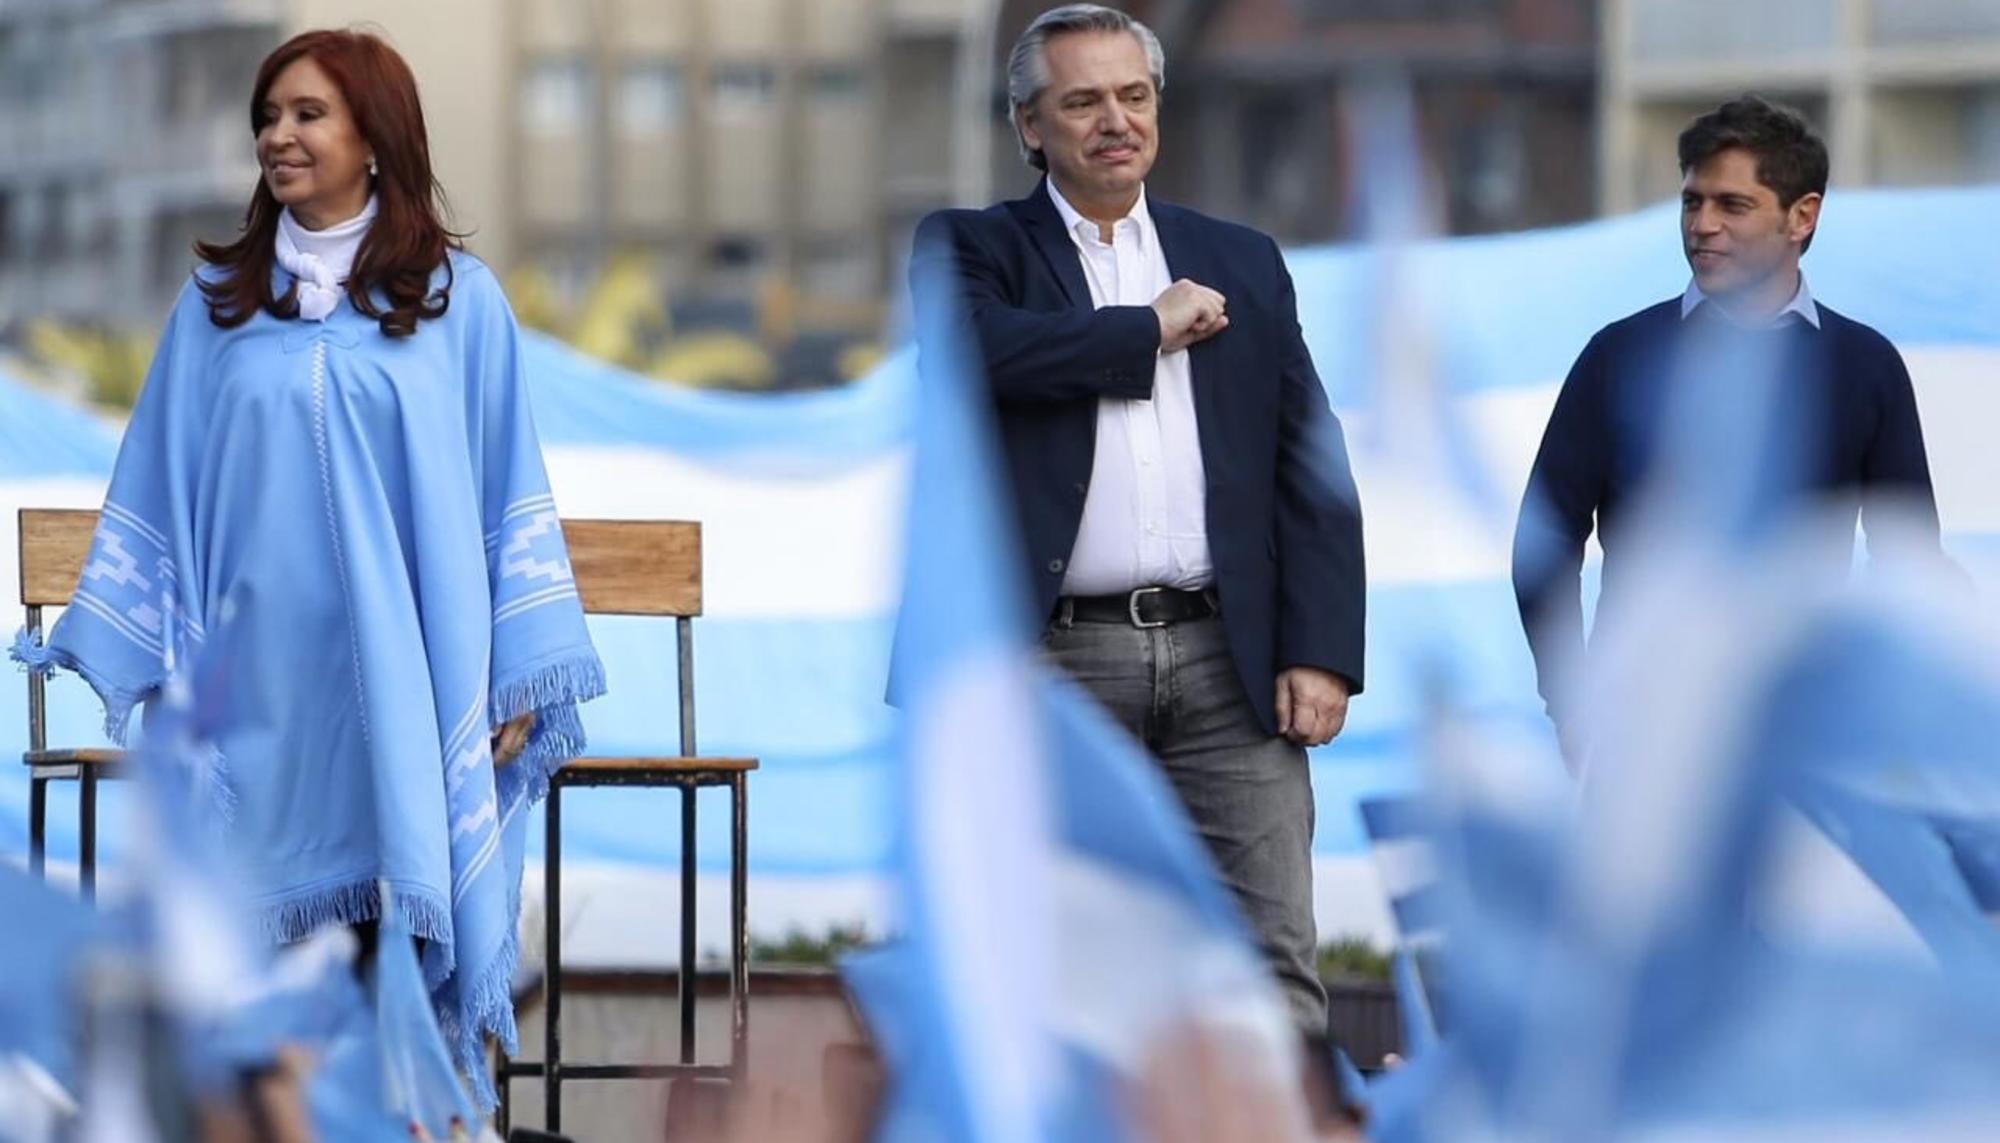 Alberto Fernández y Cristina Fernández